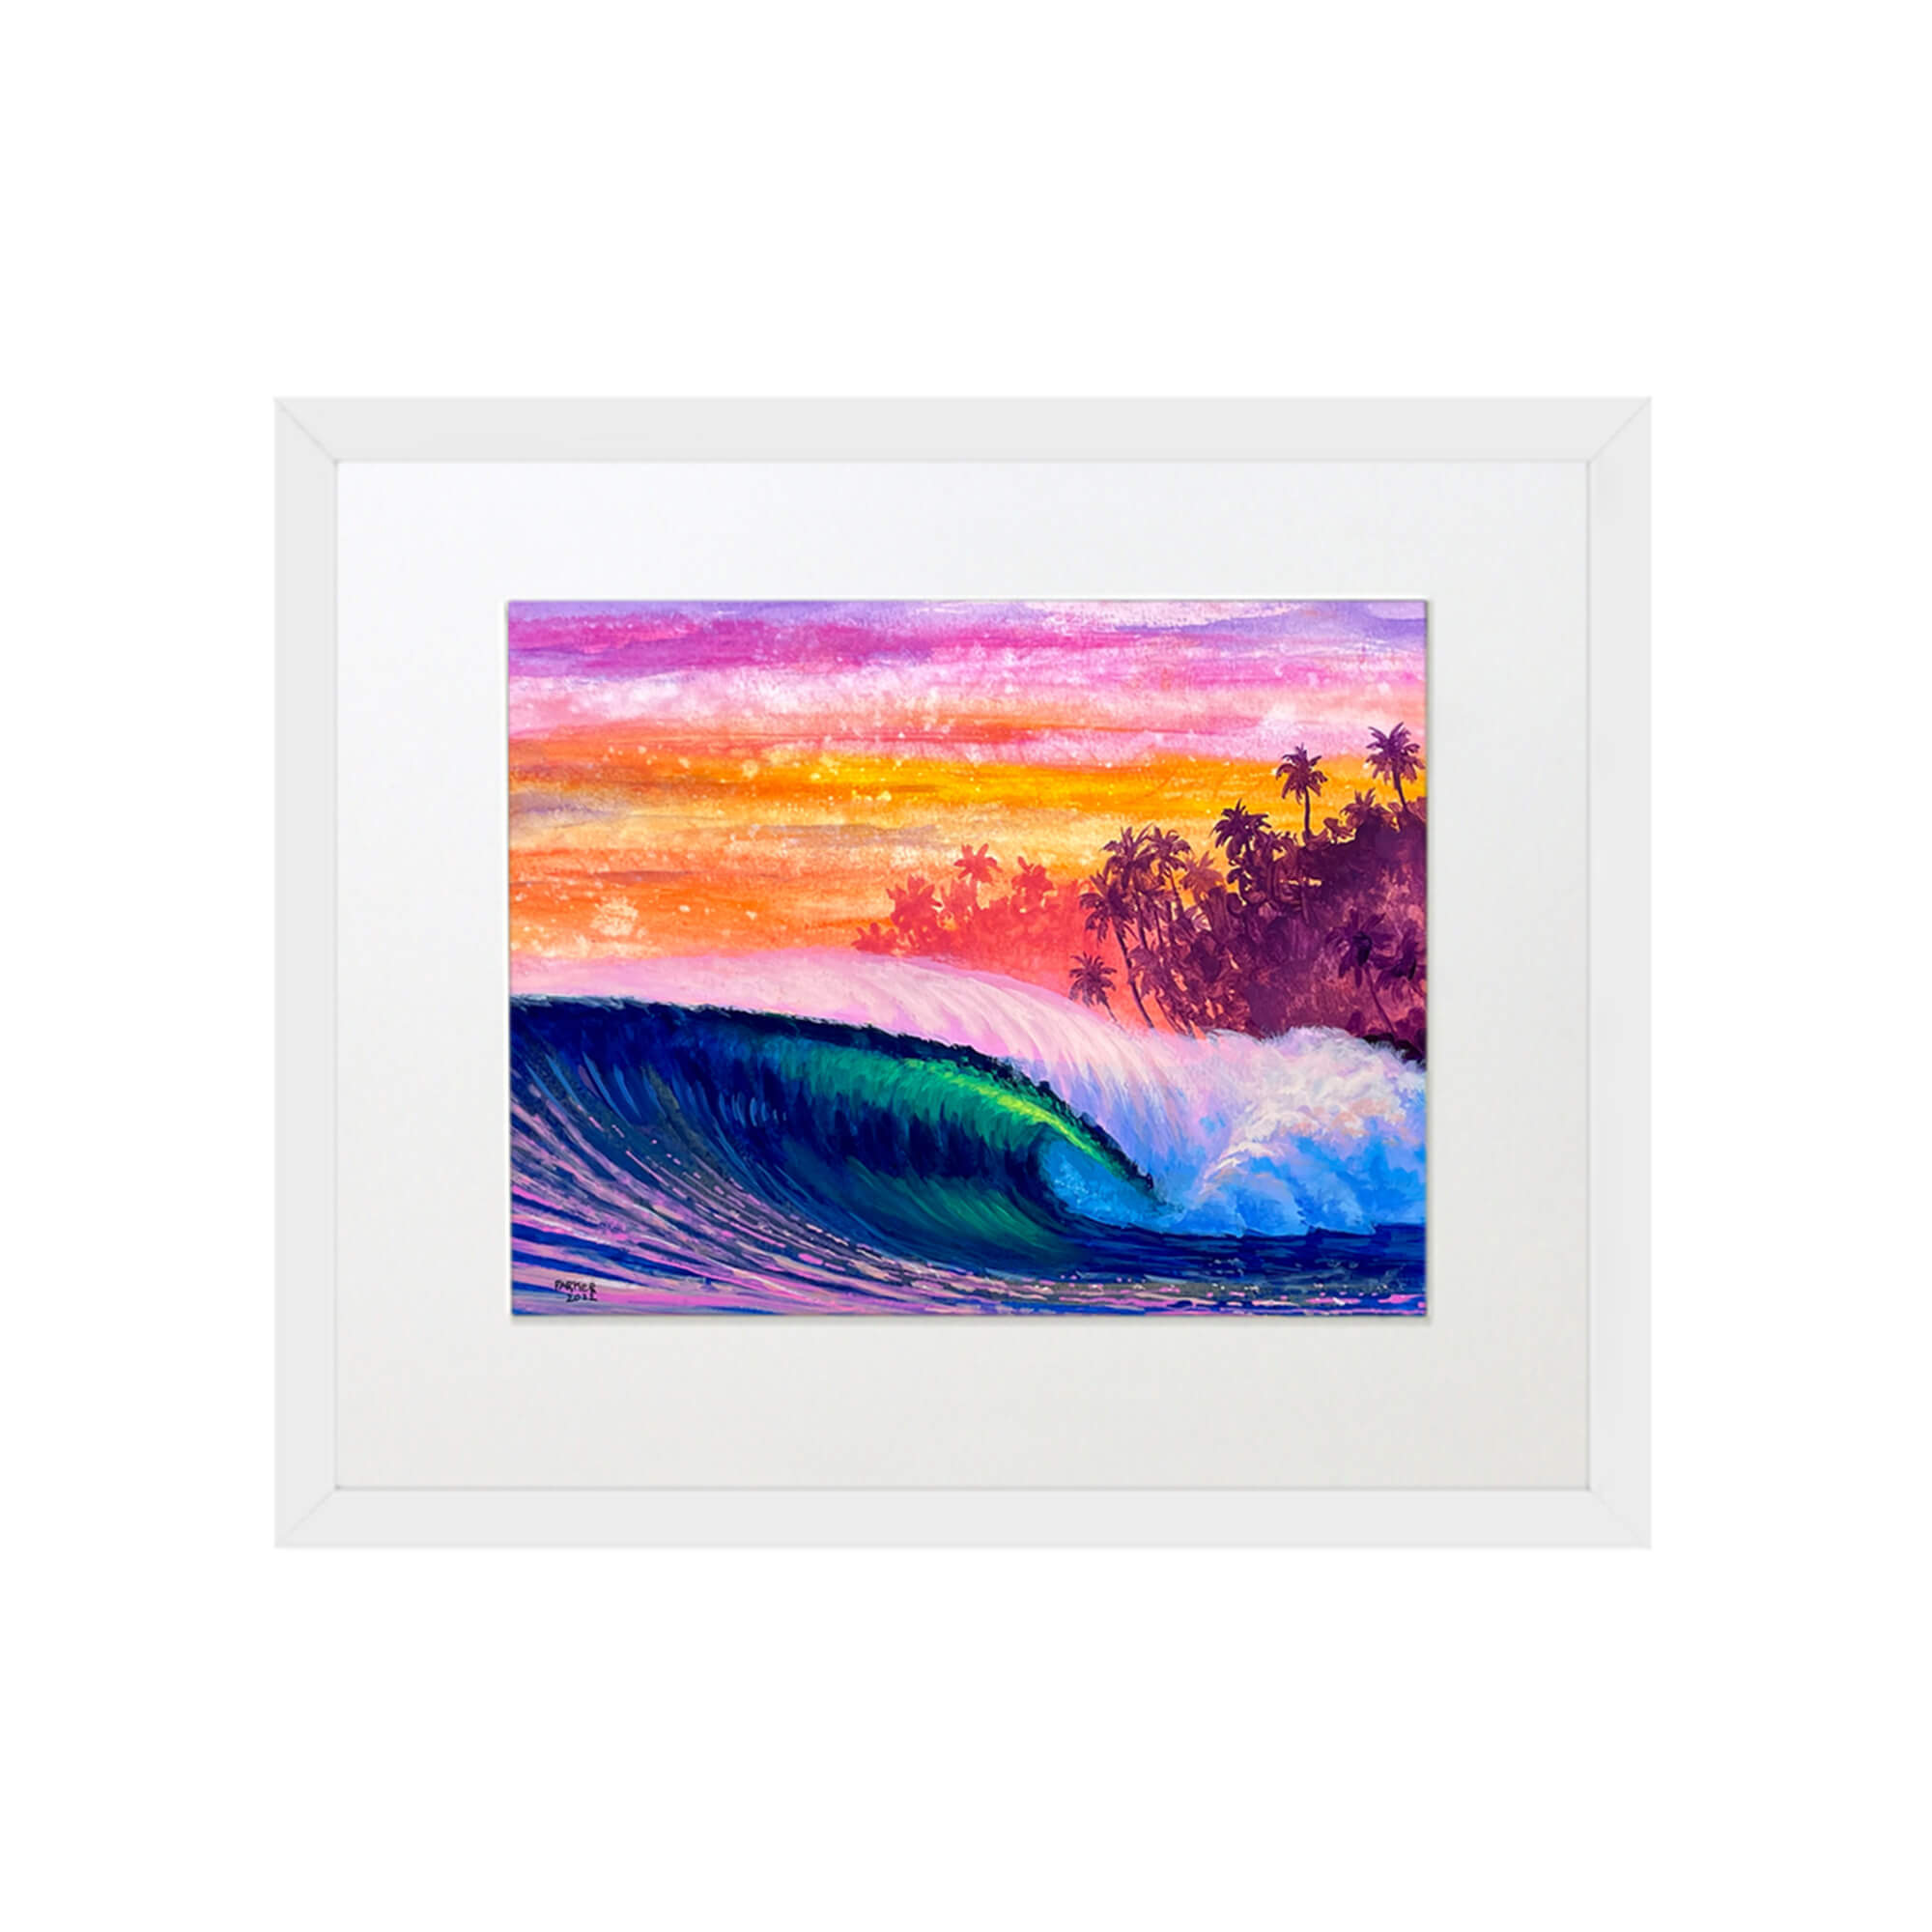 Vibrant blue wave art with purple and orange-hued sunset by Maui artist Patrick Parker